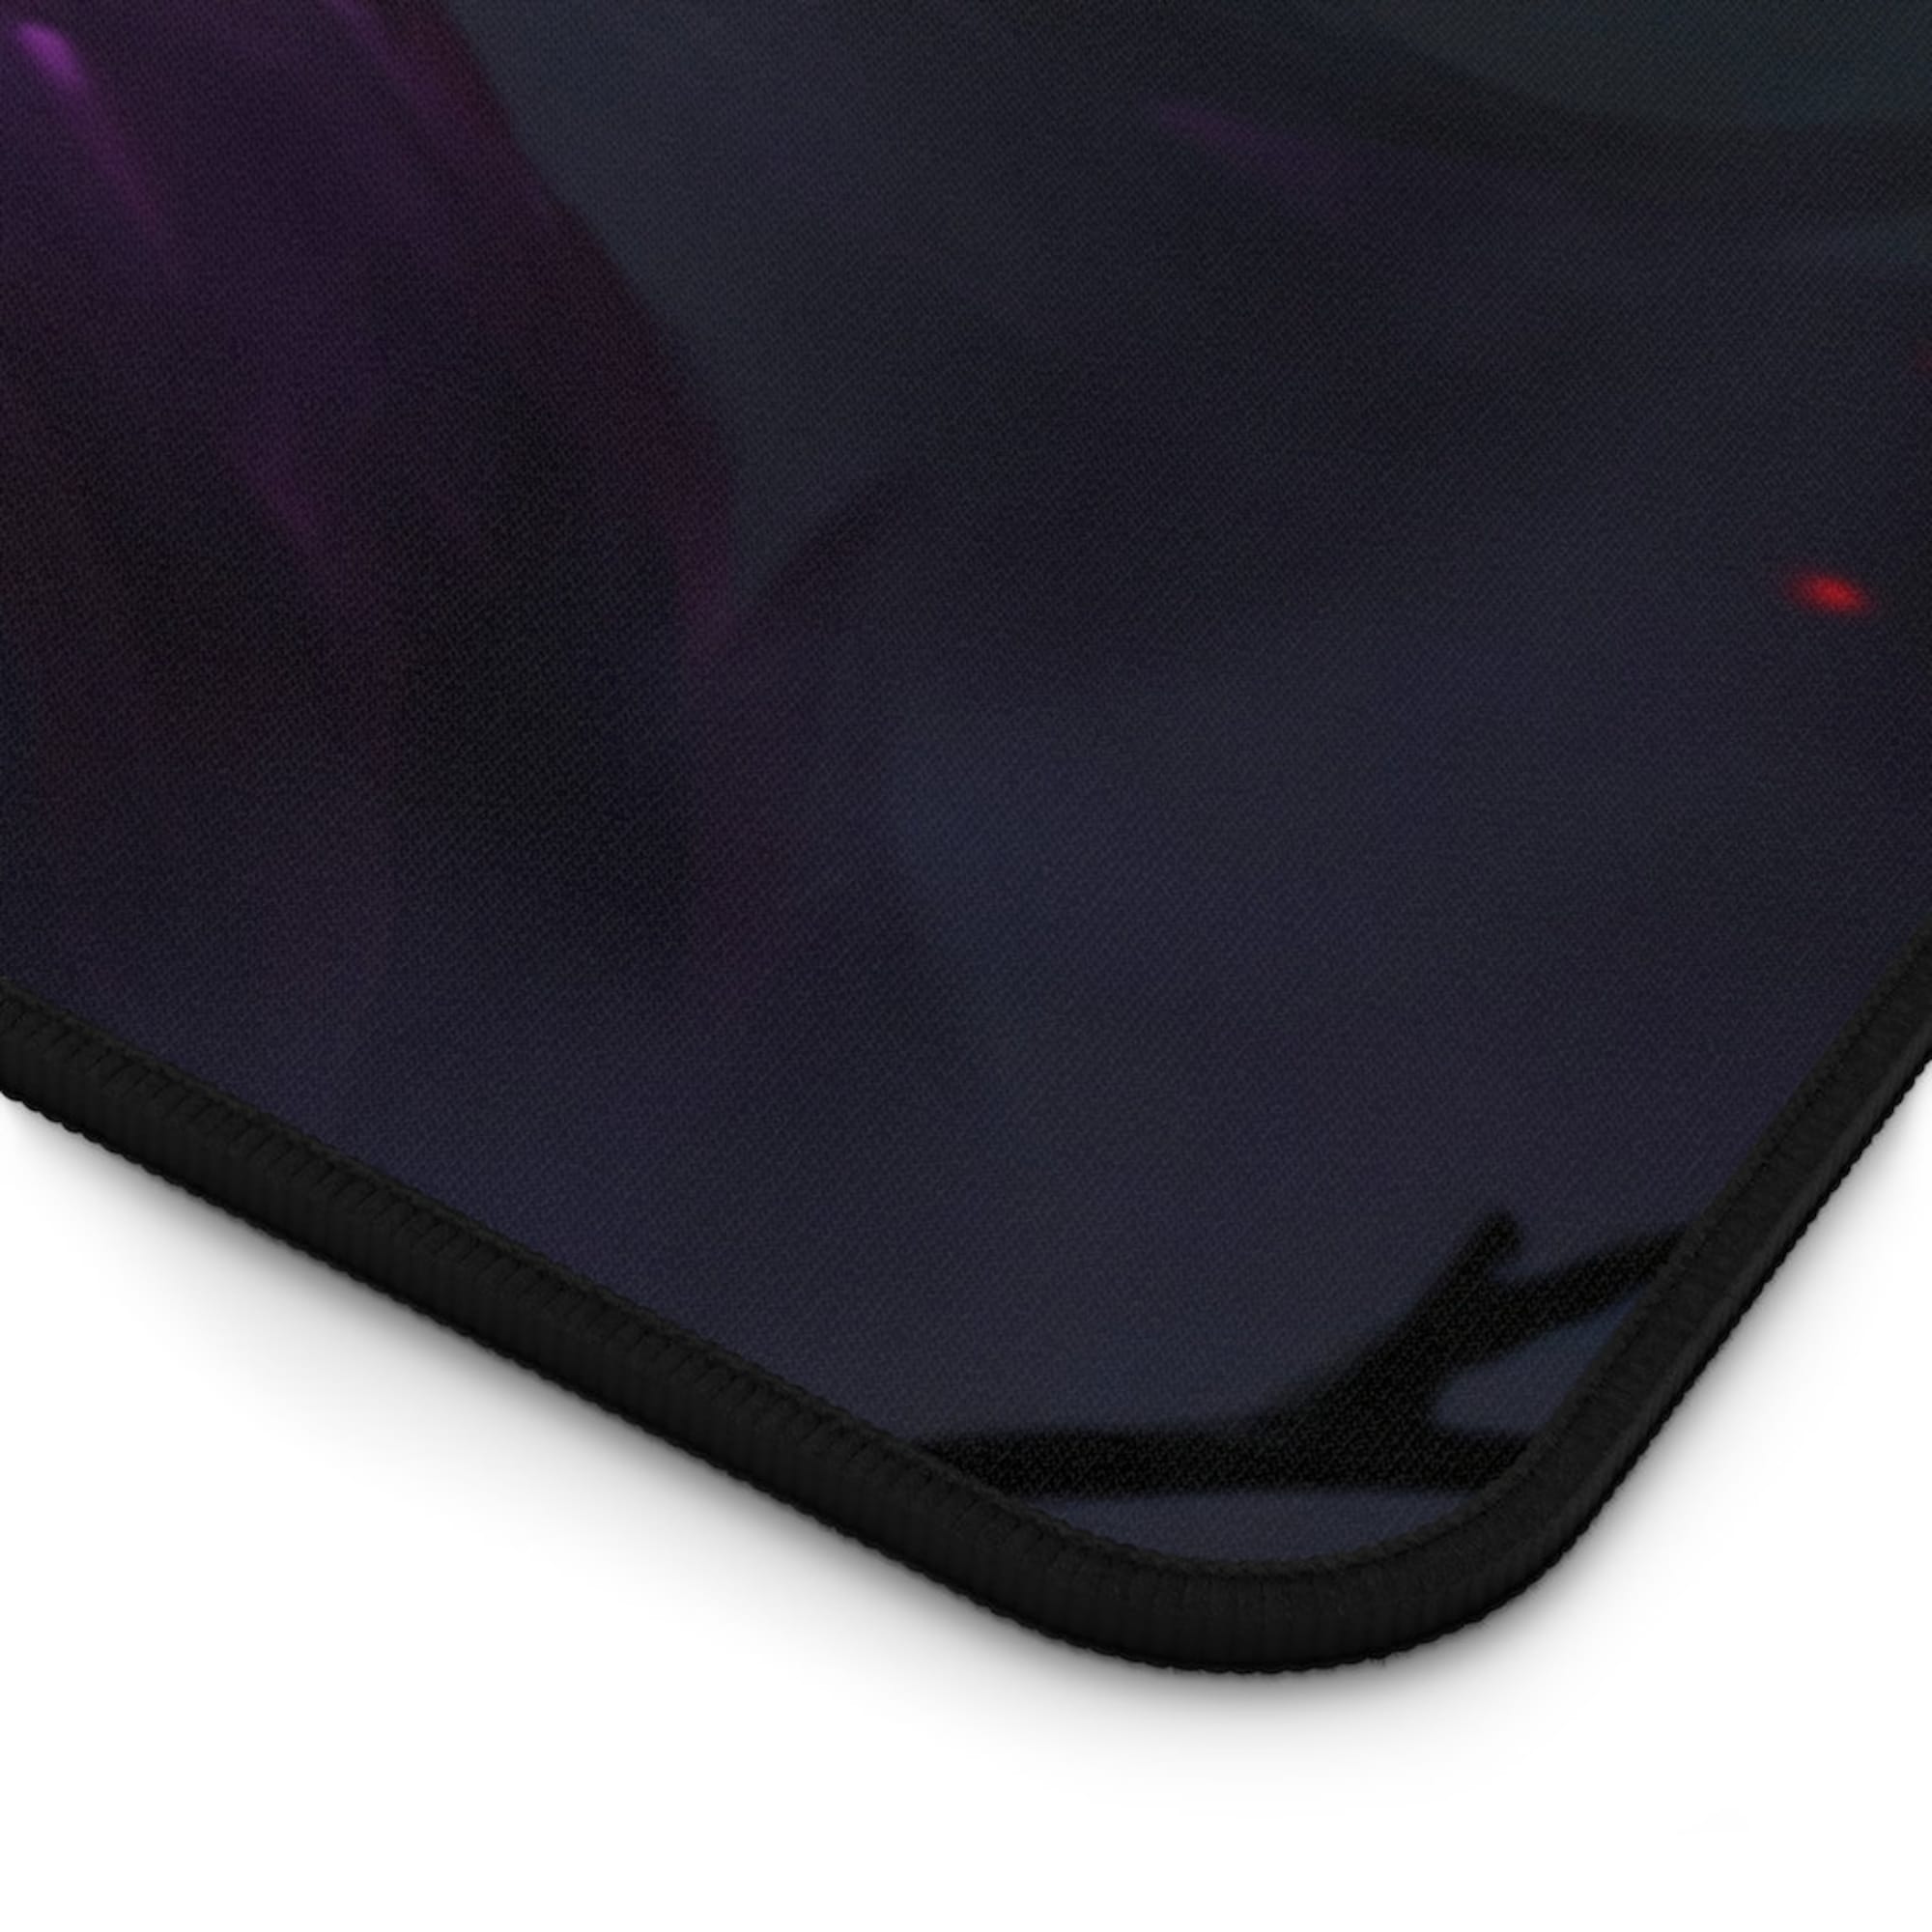 League of Legends (Coven Ahri) Gaming Mouse Pad, XL Rectangular Non-Slip Desk Mat